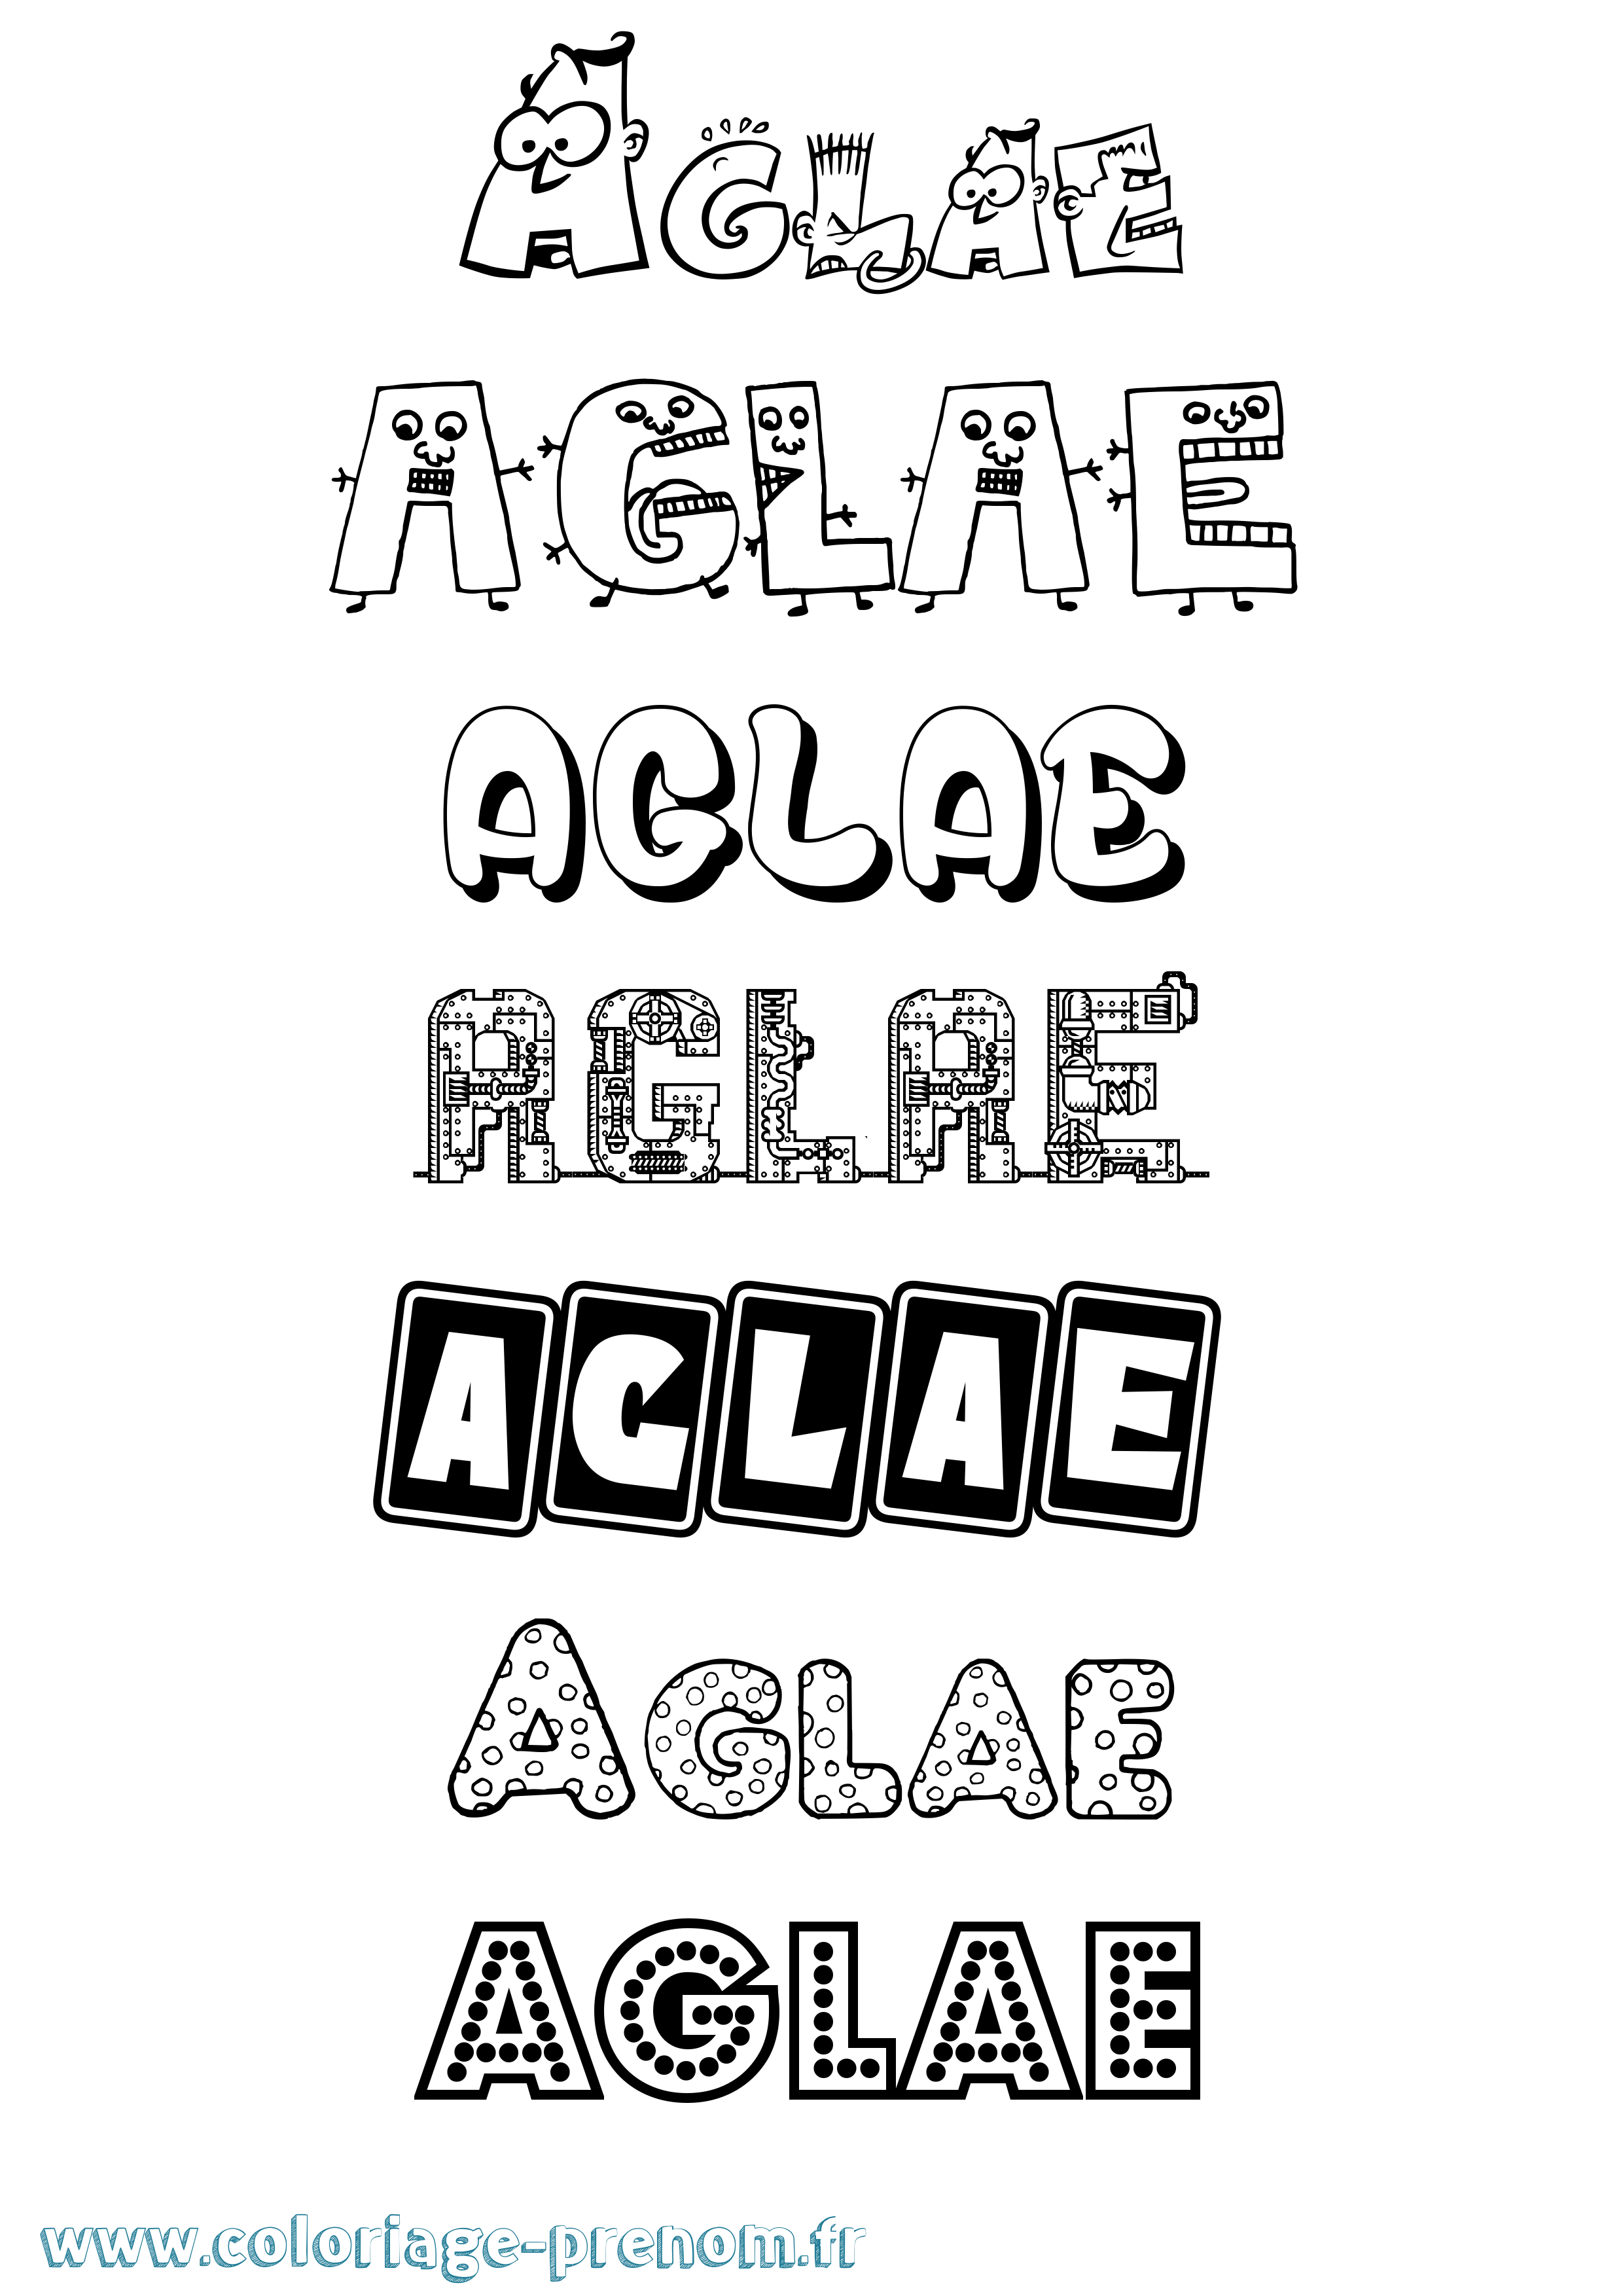 Coloriage prénom Aglae Fun